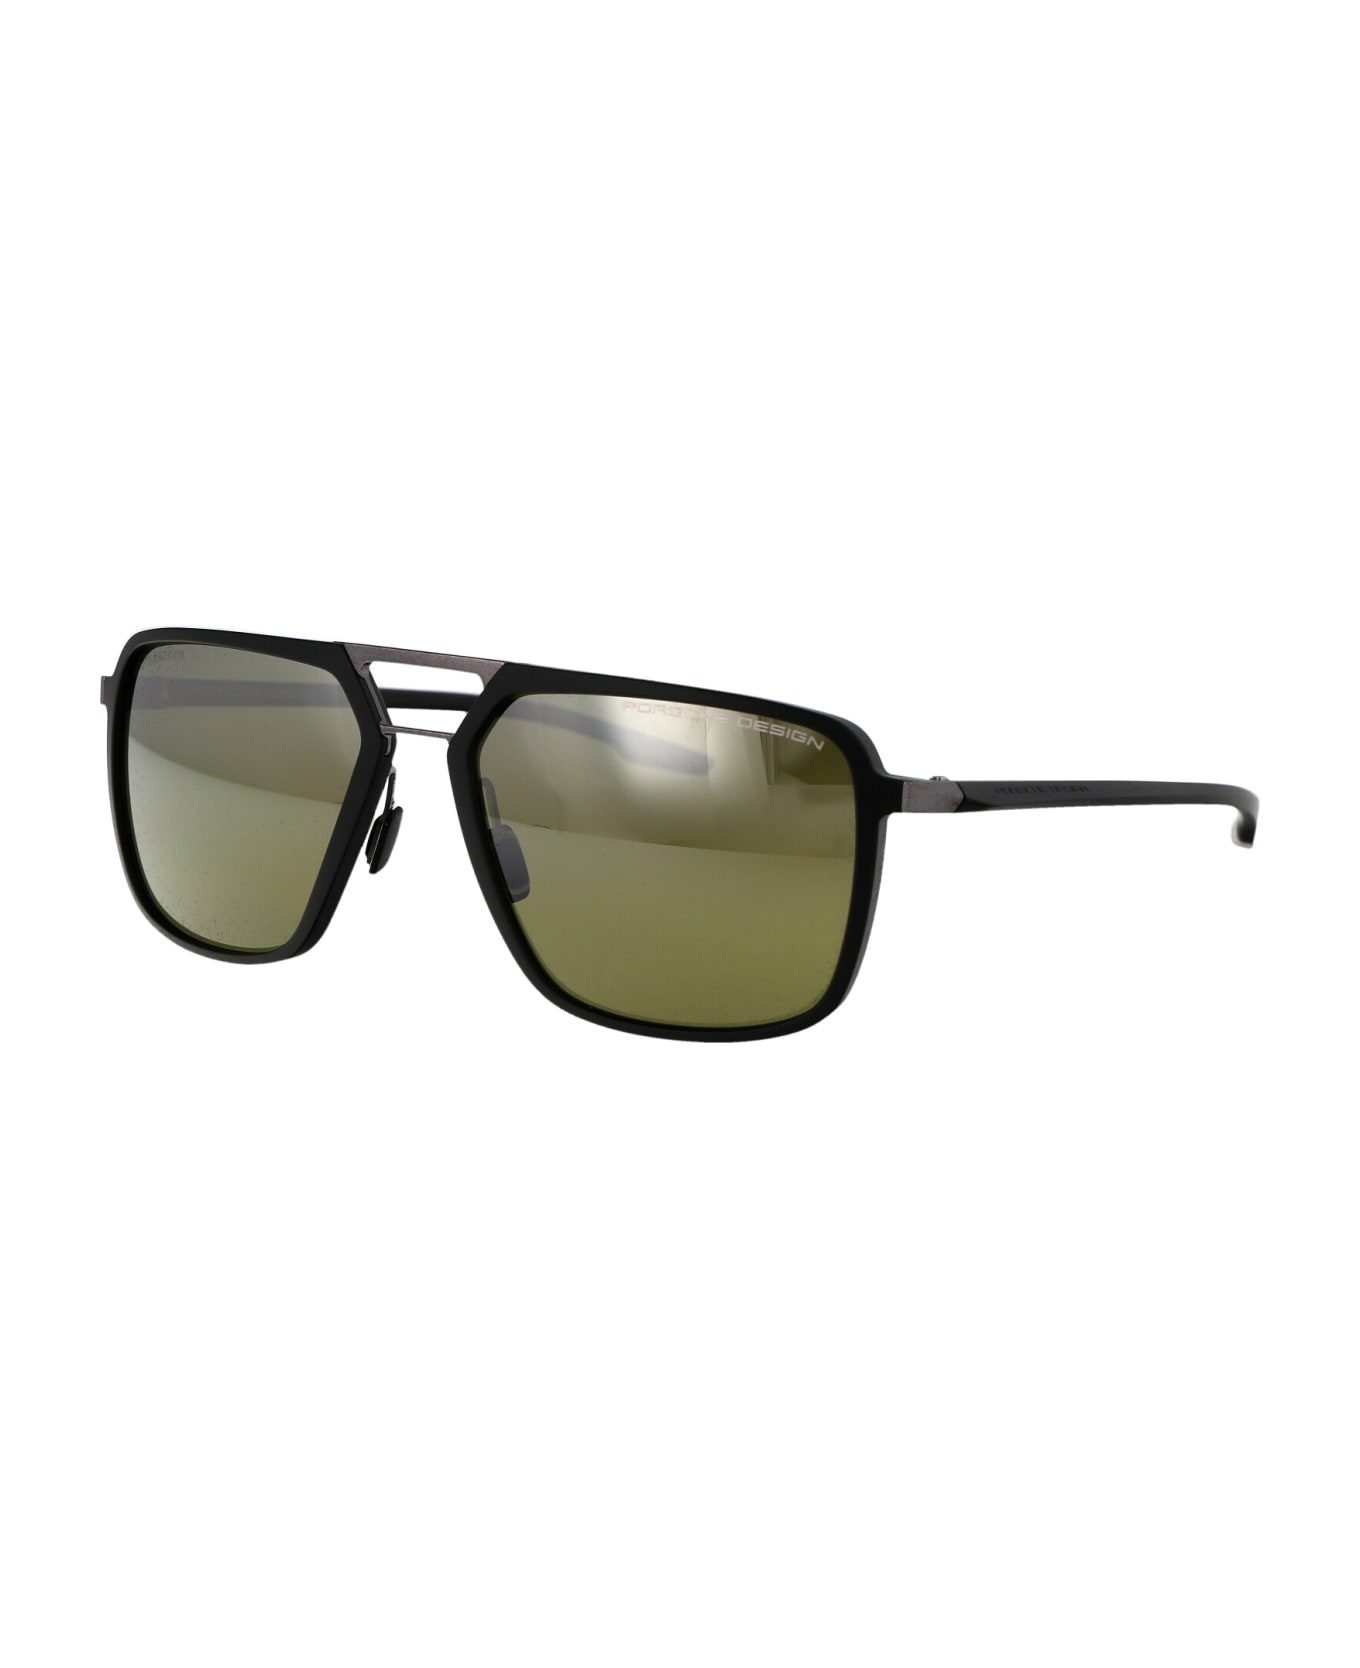 Porsche Design P8934 Sunglasses - A427 BLACK